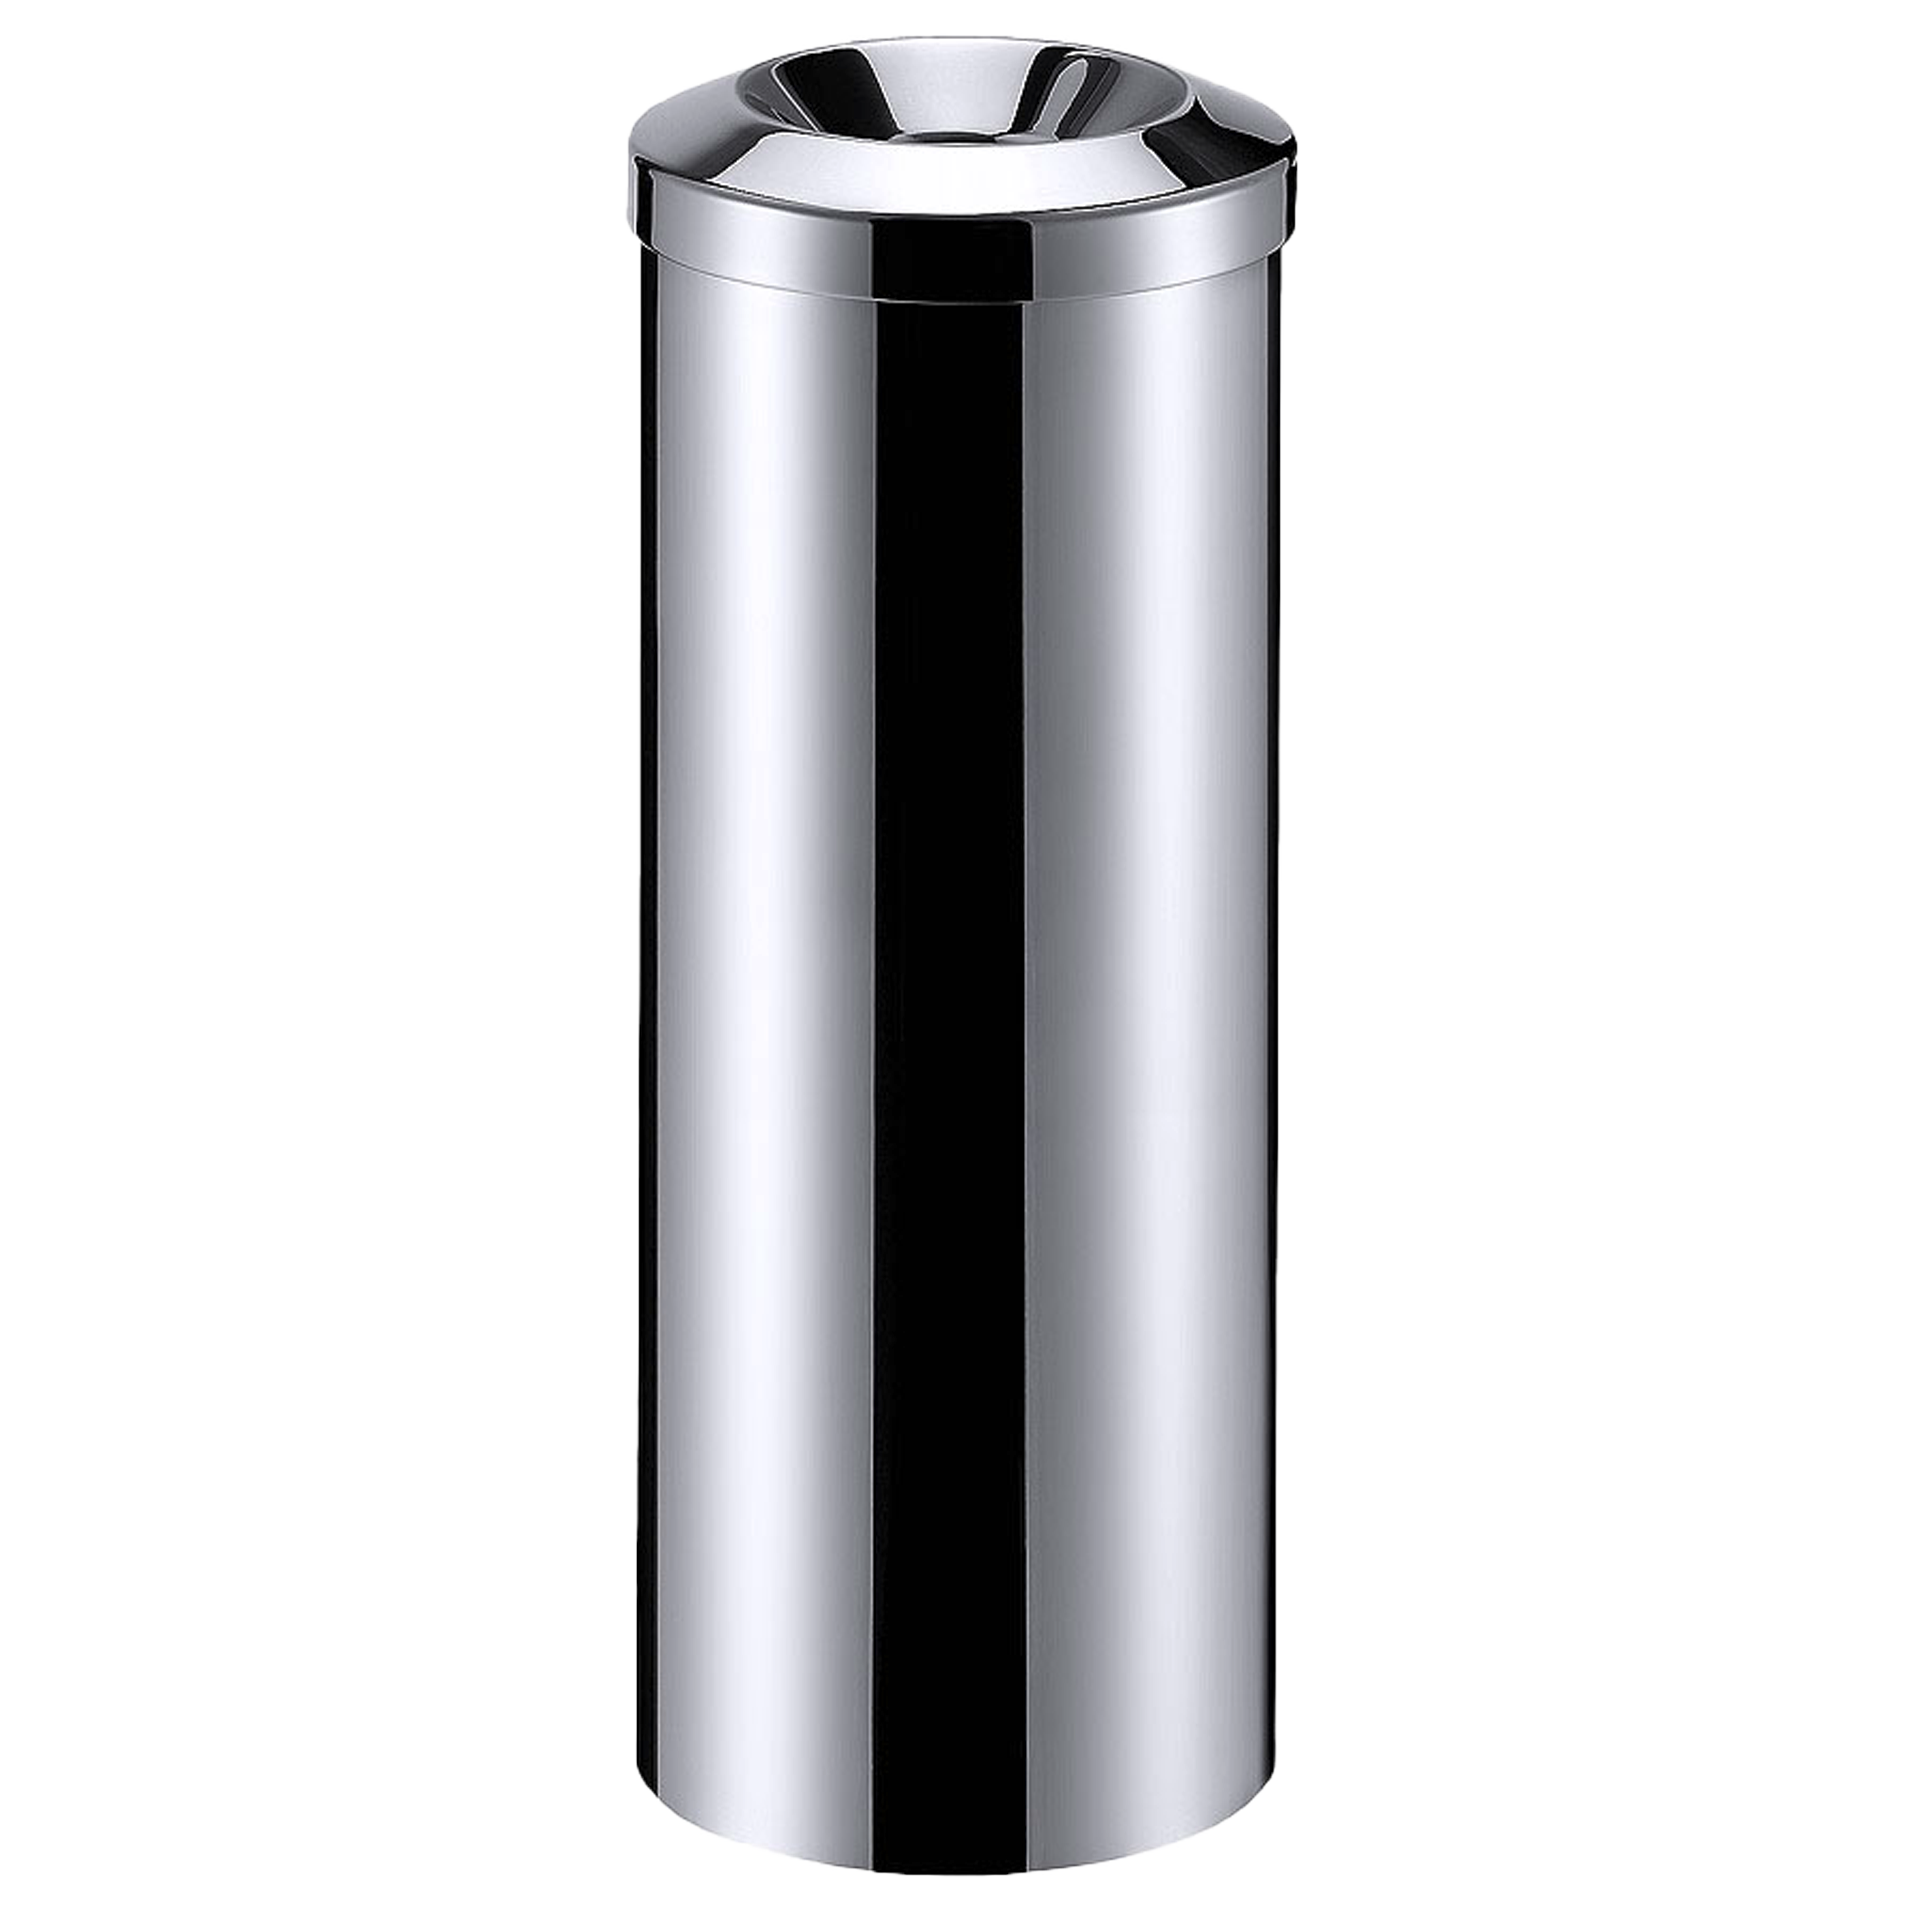 Abfallbehälter Edelstahl | silber glänzig Ø 25x h 68 cm